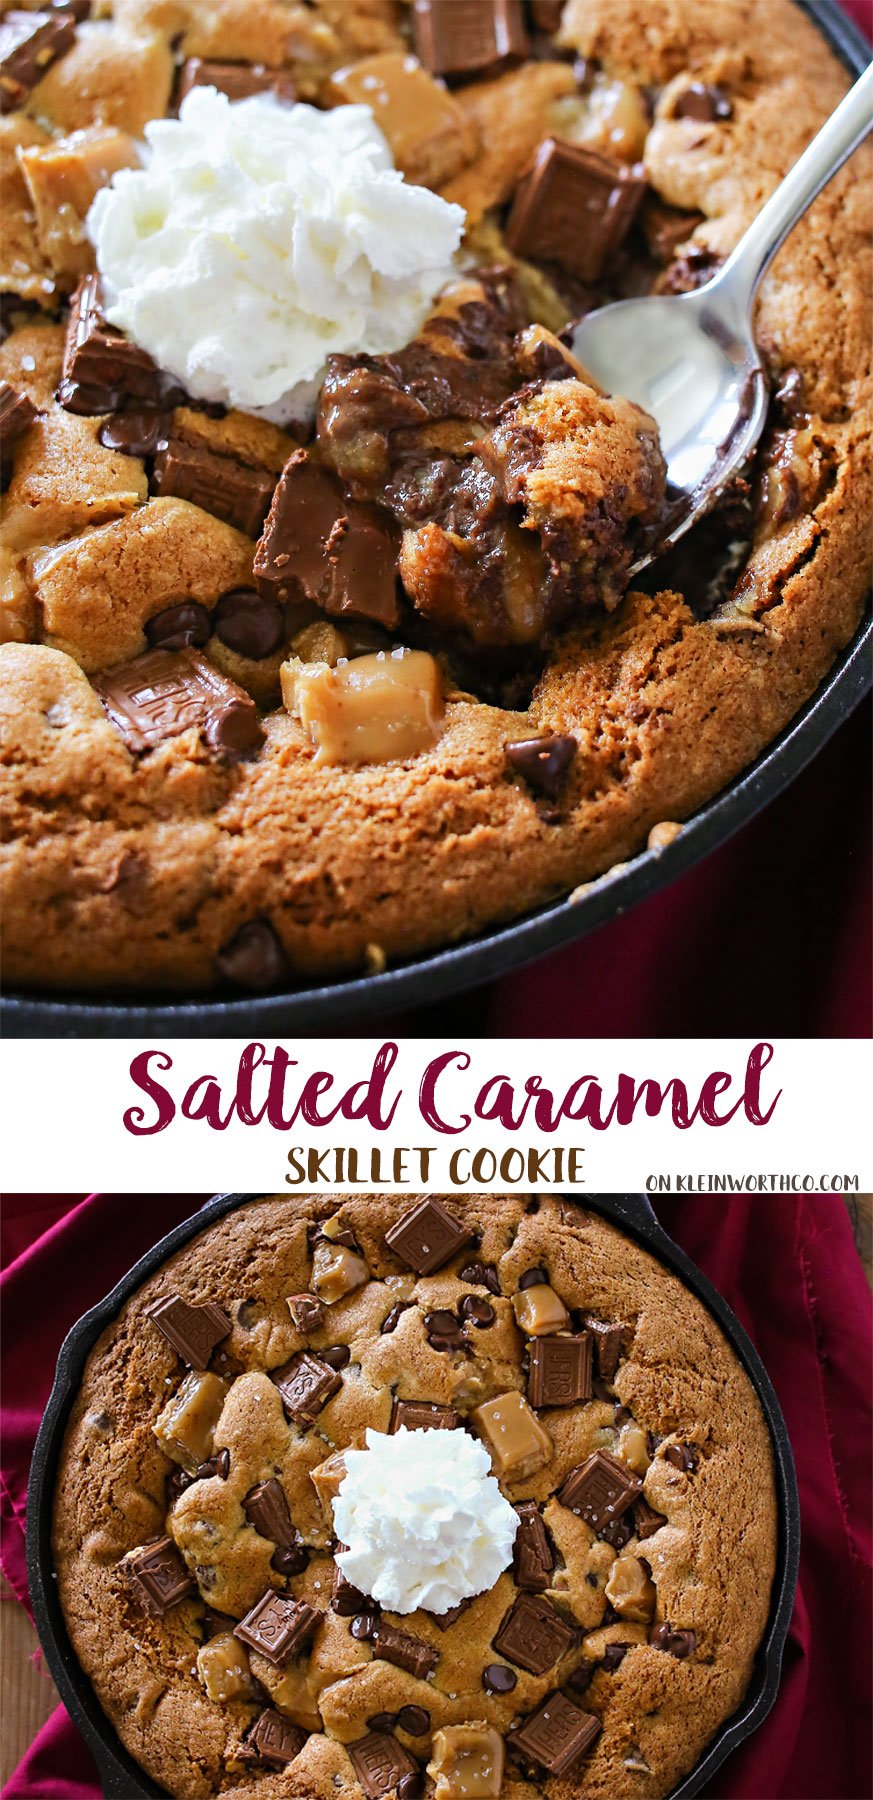 Cast Iron Skillet Chocolate Chip Cookie with Sea Salt Caramel